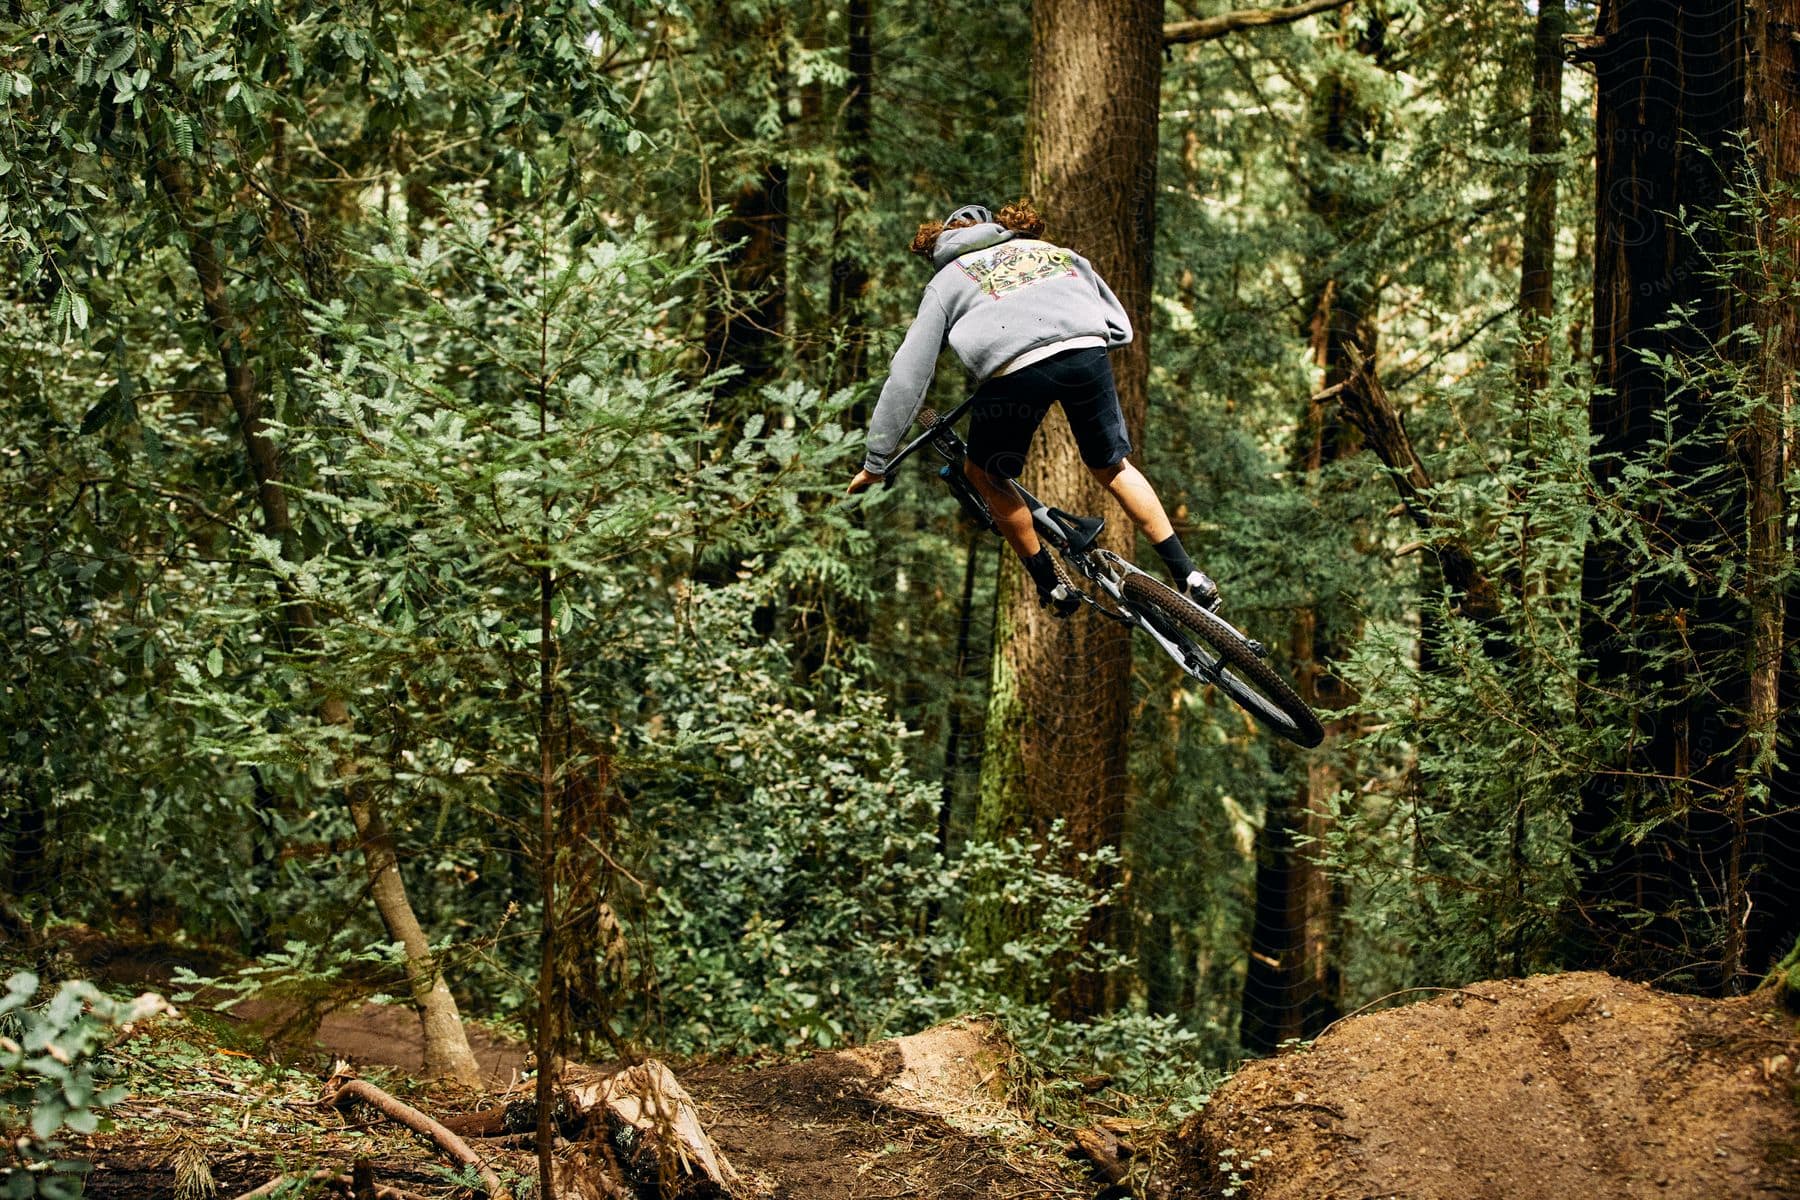 A mountain biker leaps over an embankment in an evergreen forest.